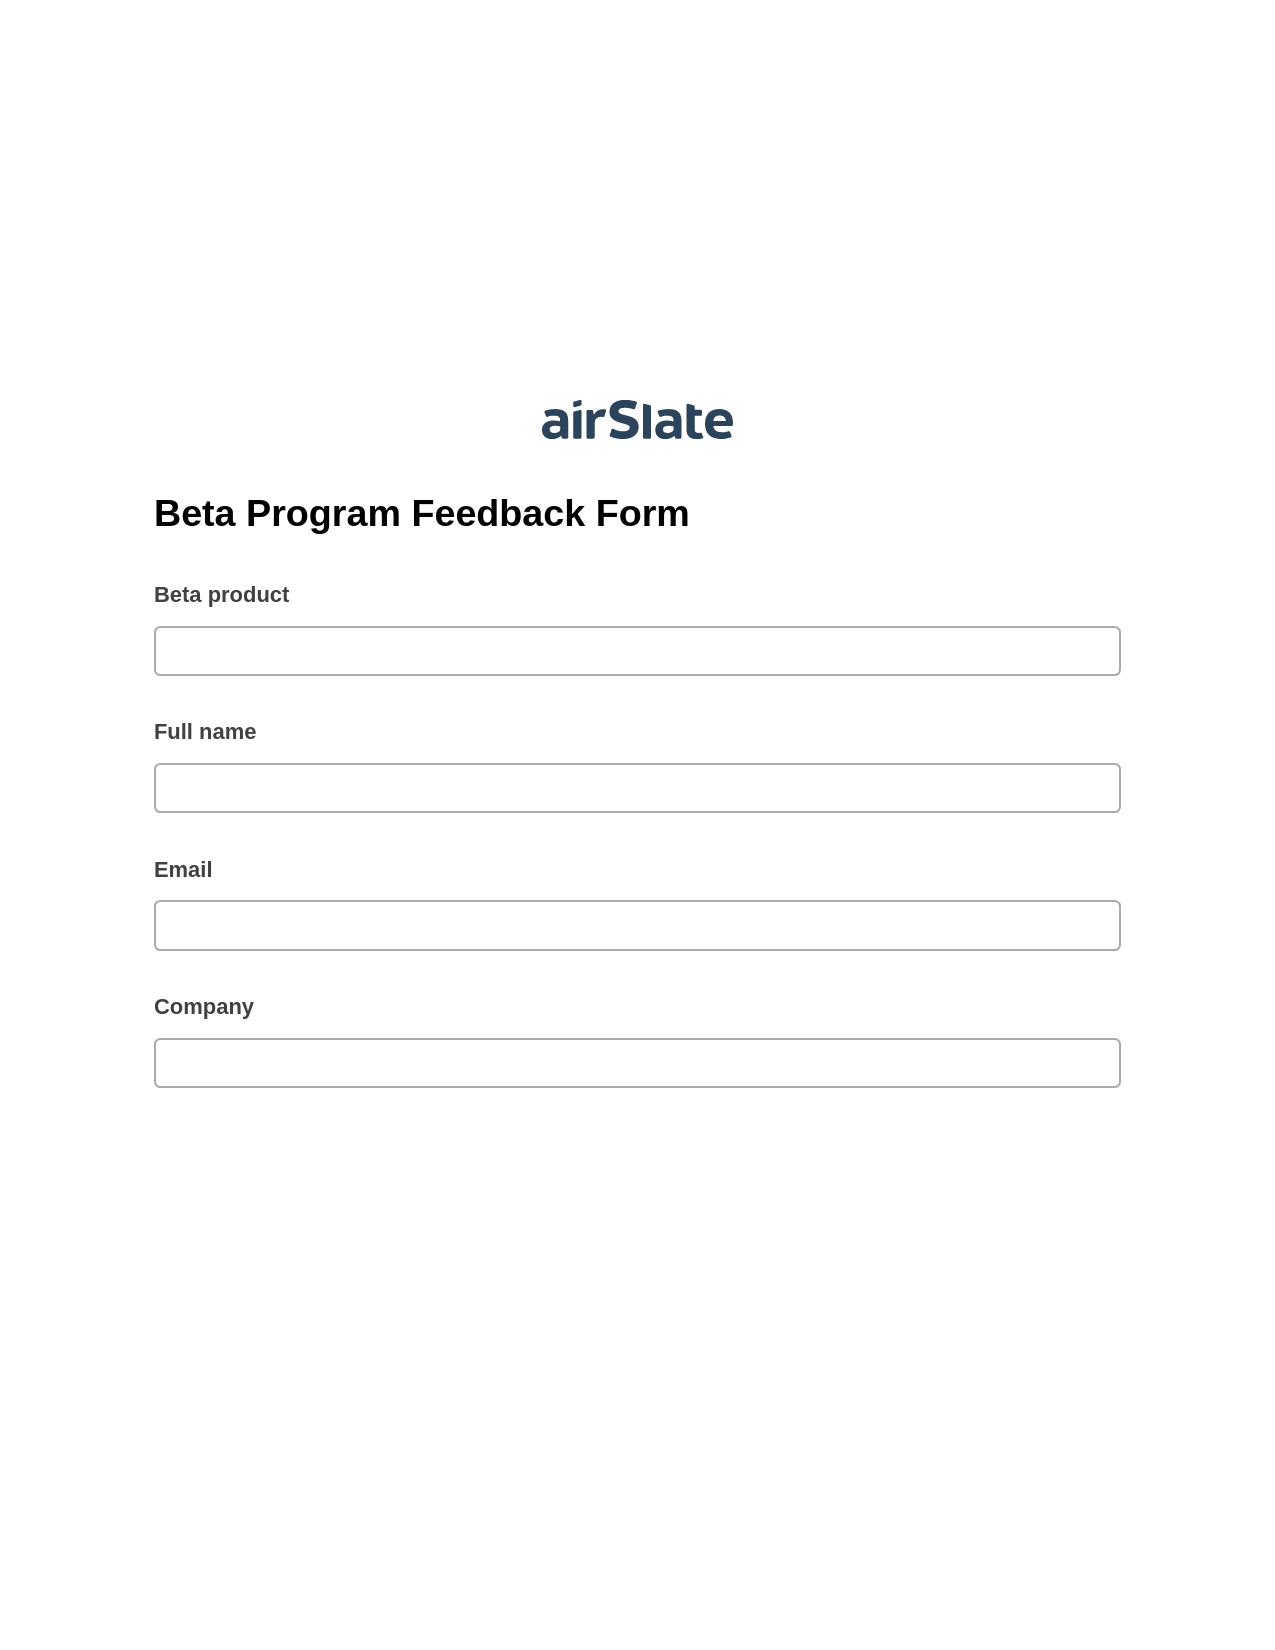 Beta Program Feedback Form Pre-fill Slate from MS Dynamics 365 Records Bot, Webhook Bot, Export to MySQL Bot